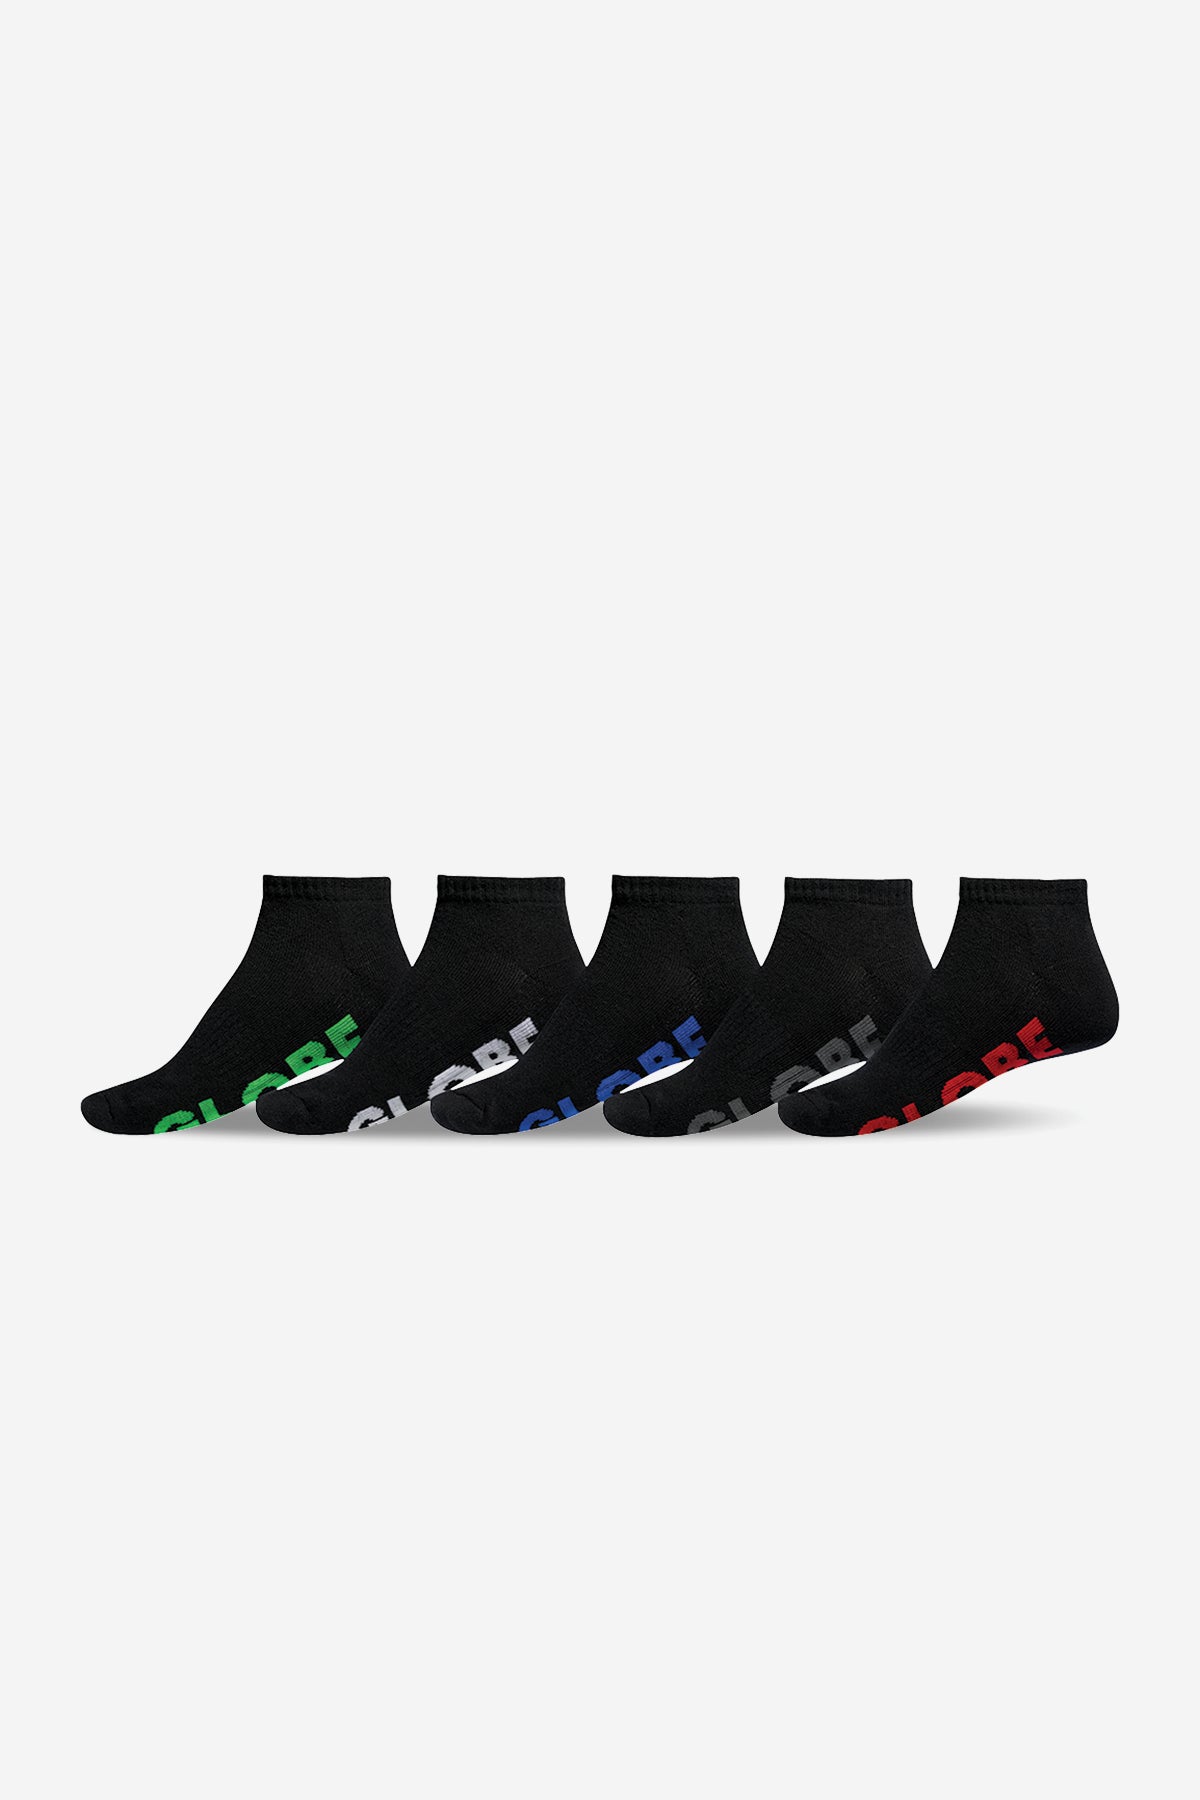 logo color options of Stealth Ankle Sock 5pk in black